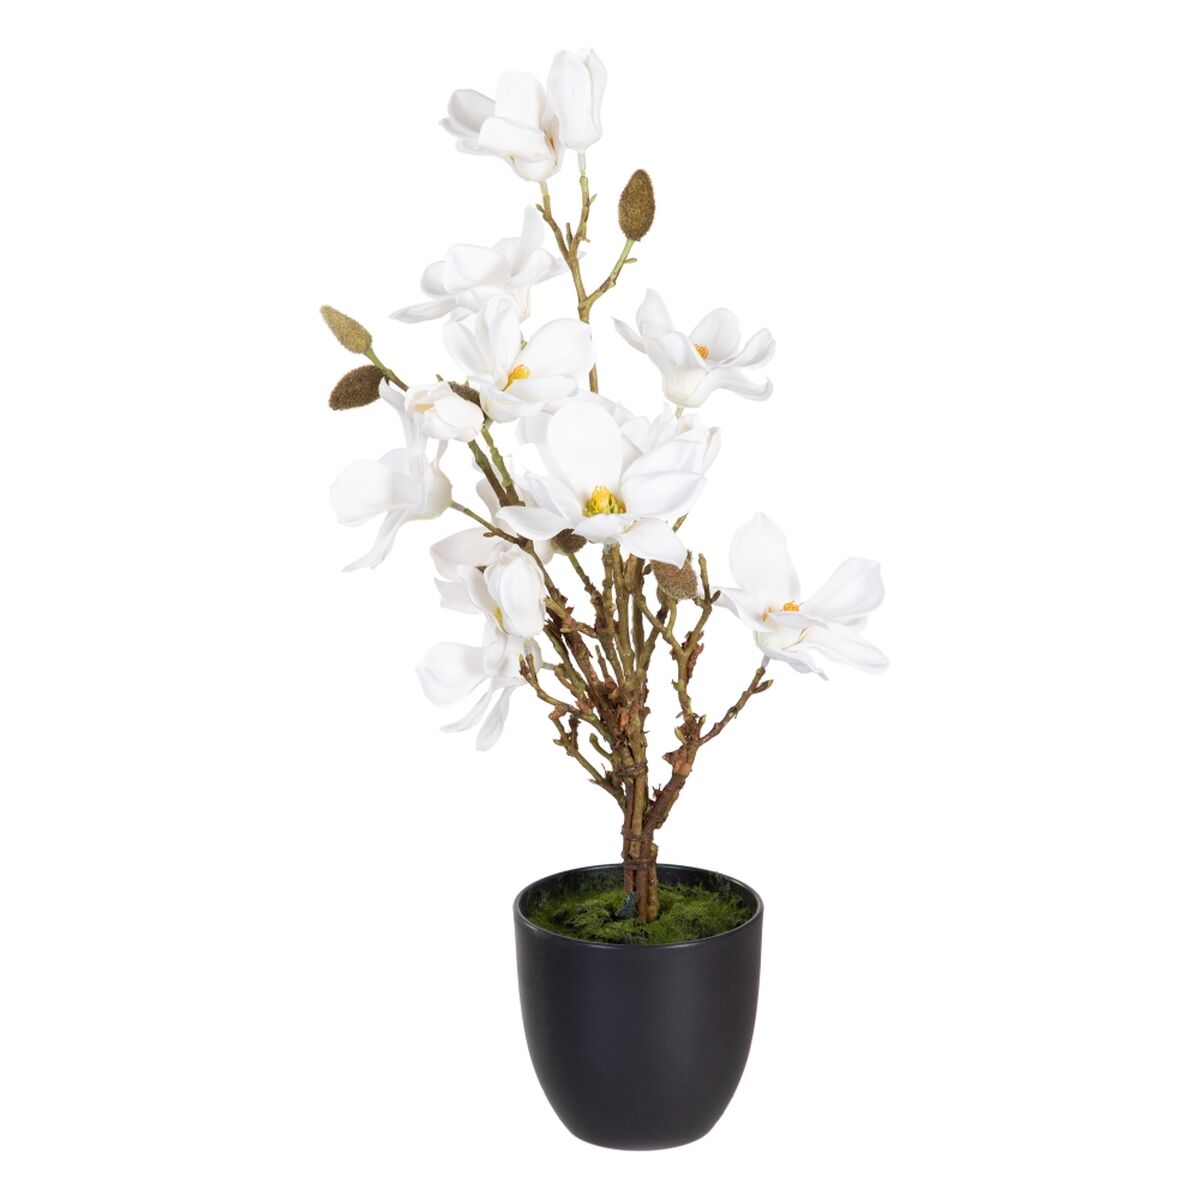 Plante décorative Polyester Polyéthylène Fer 30 x 30 x 60 cm Magnolia